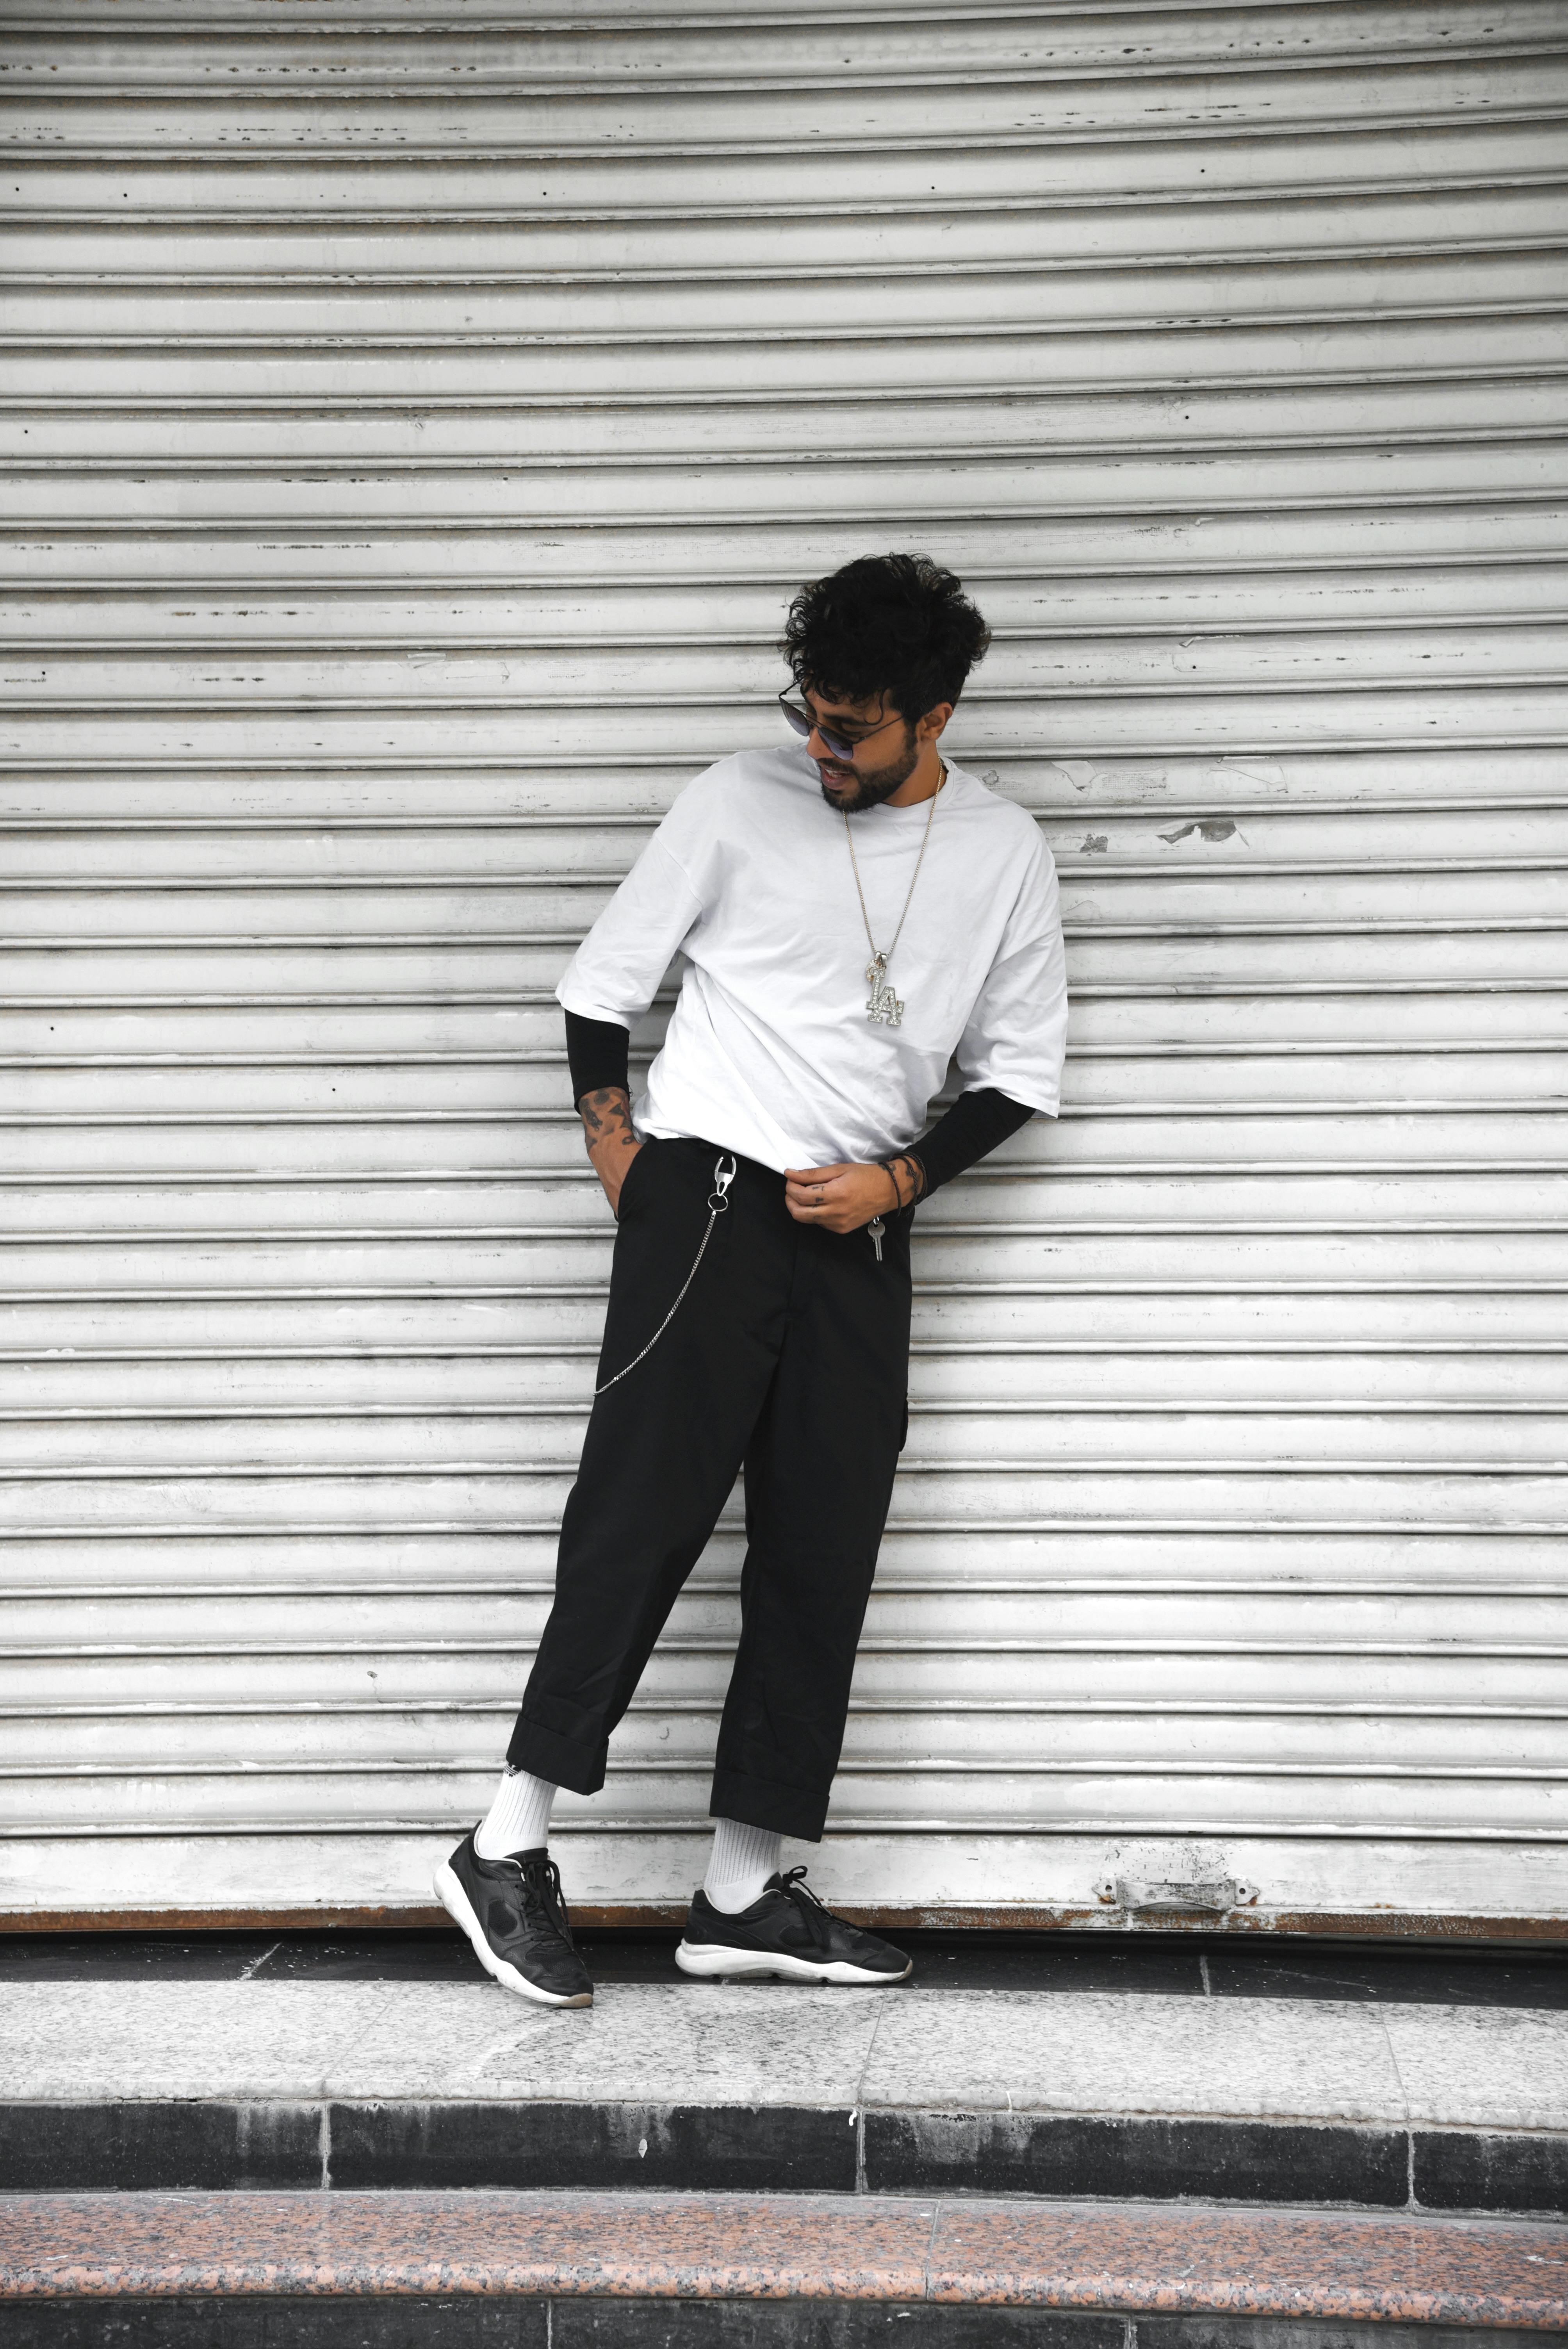 White shirt and black pants formal fabric per